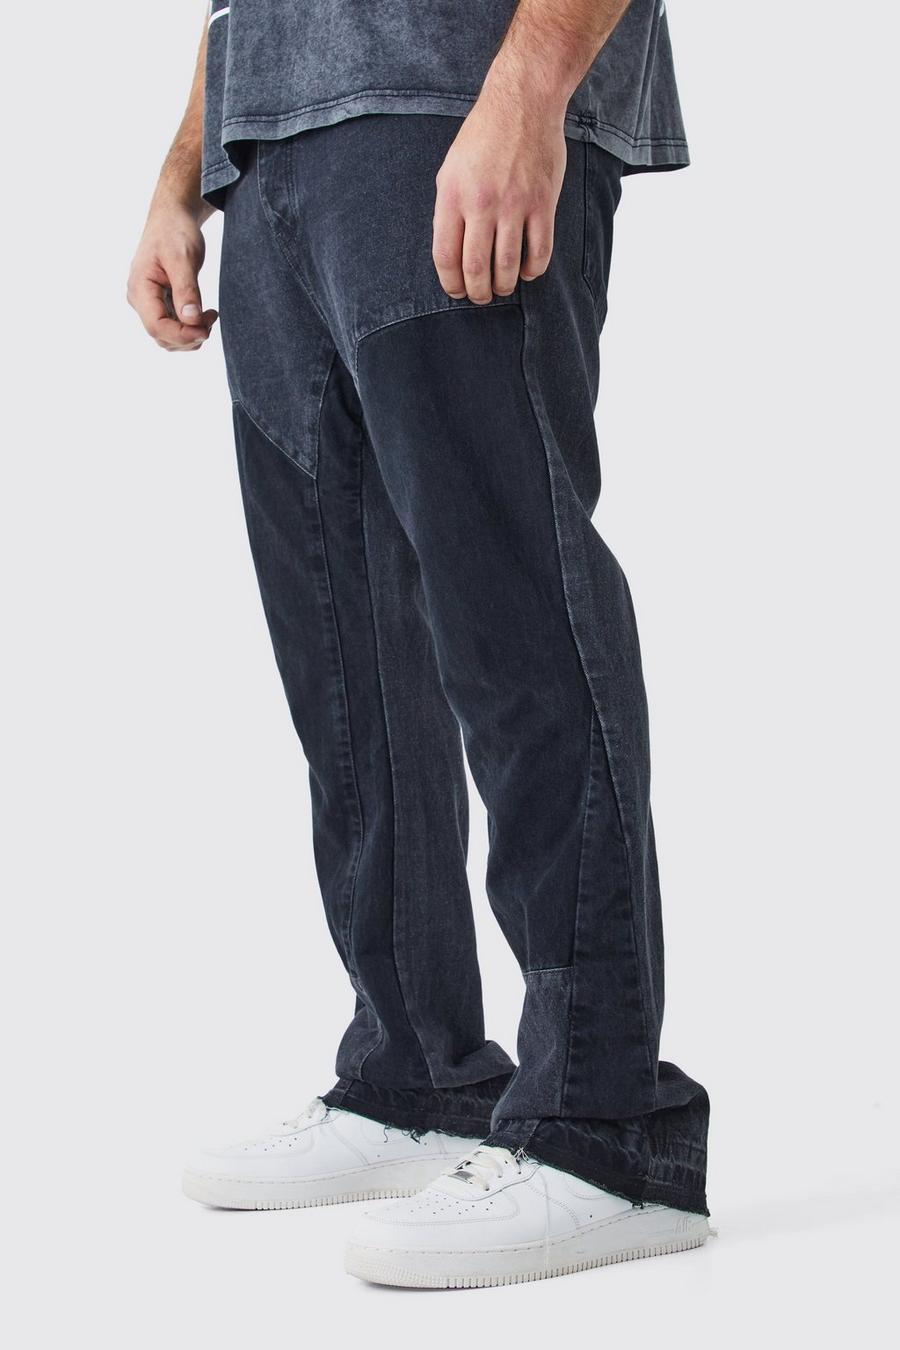 Jeans Plus Size Slim Fit in denim rigido sovratinto stile Carpenter, Charcoal image number 1